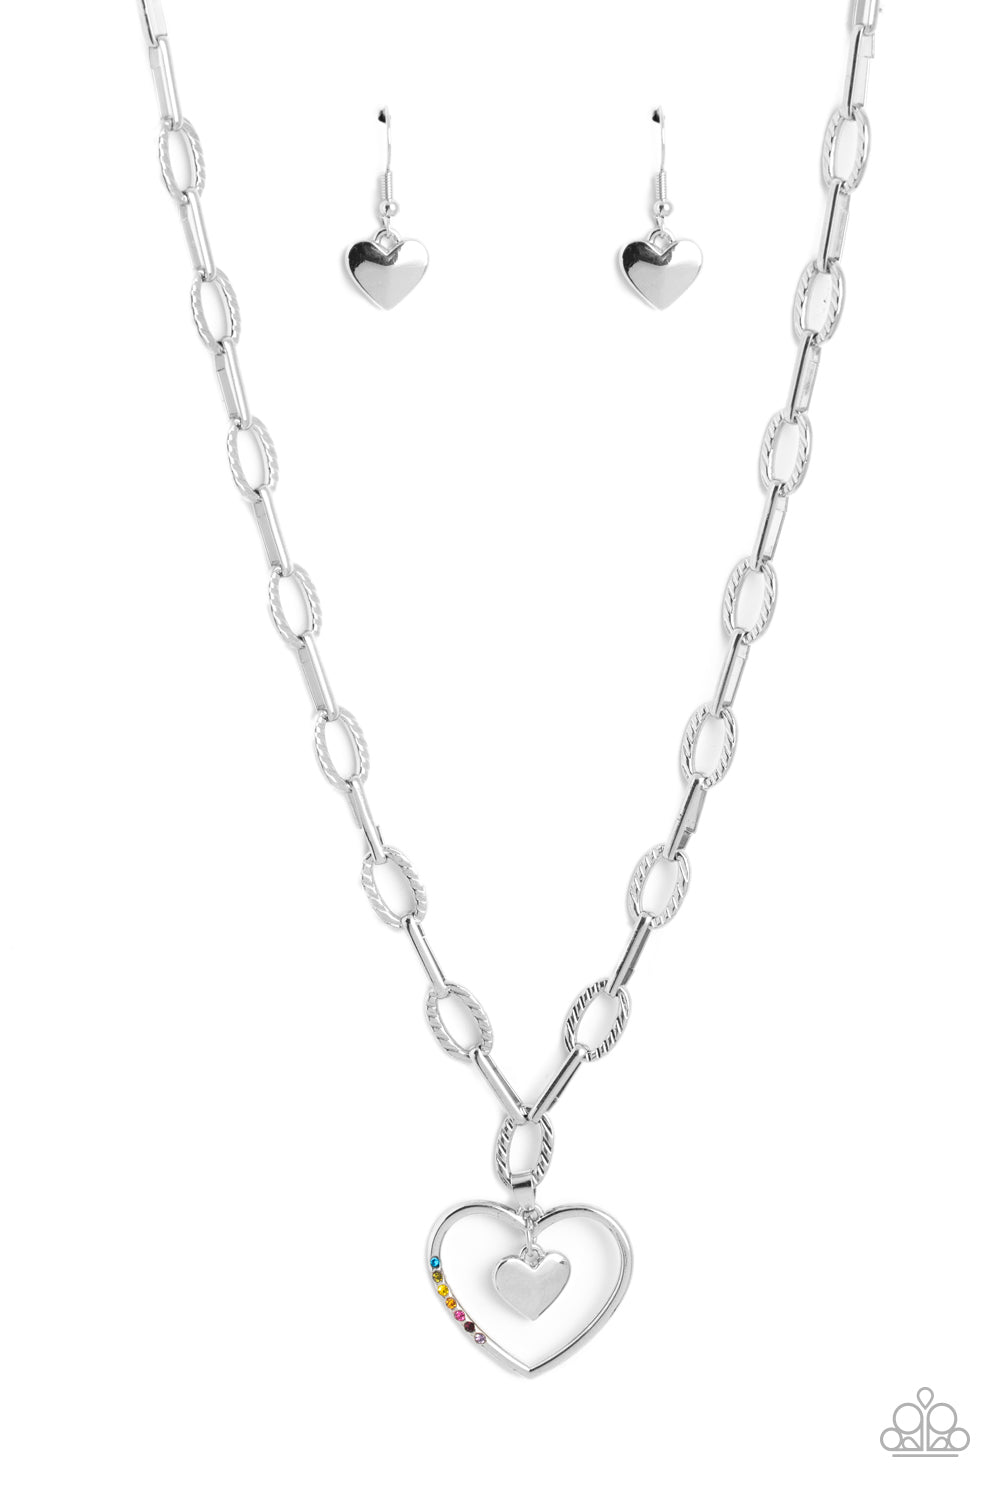 Refulgent Romance Multi Heart Necklace - Paparazzi Accessories- lightbox - CarasShop.com - $5 Jewelry by Cara Jewels